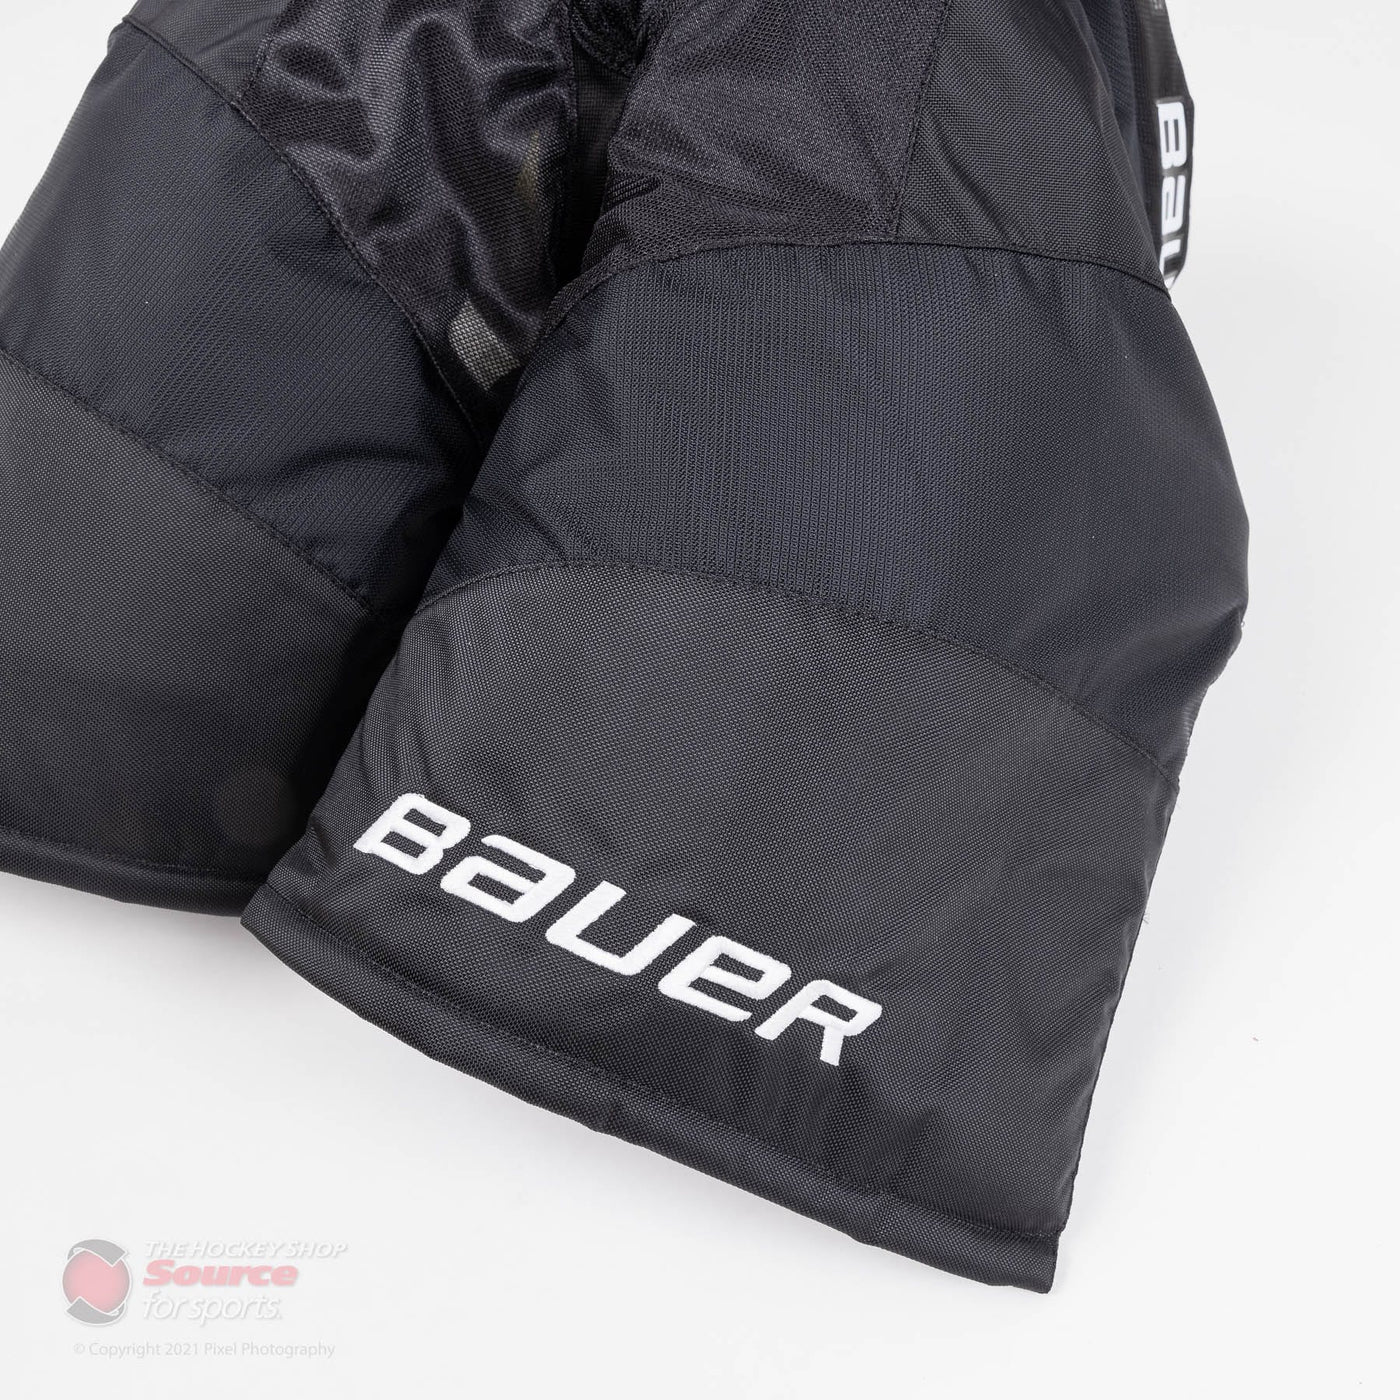 Bauer Supreme 3S Pro Junior Hockey Pants